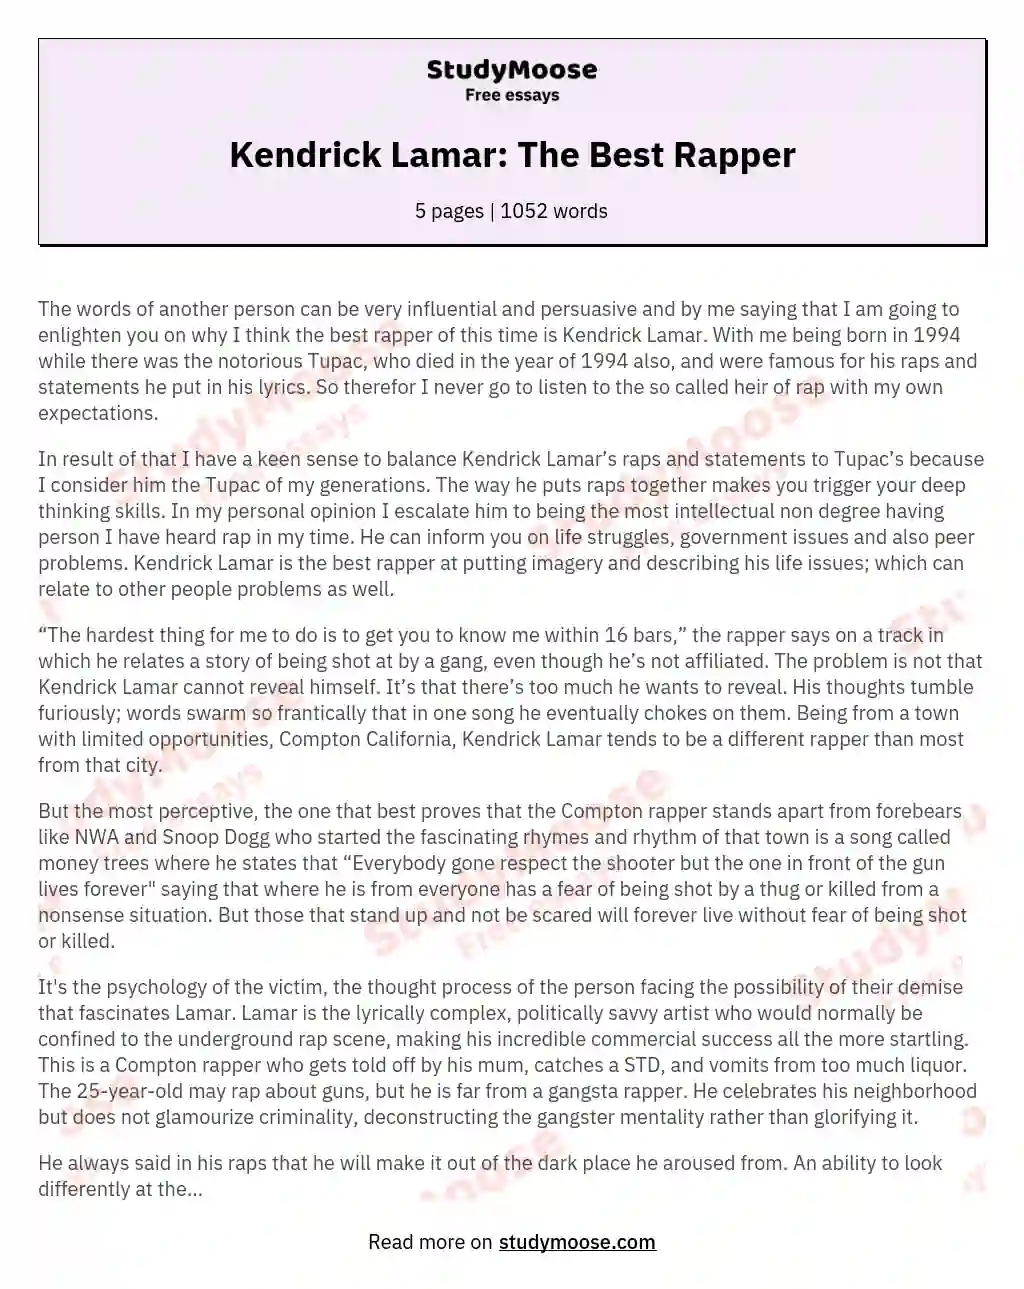 Kendrick Lamar: The Best Rapper essay